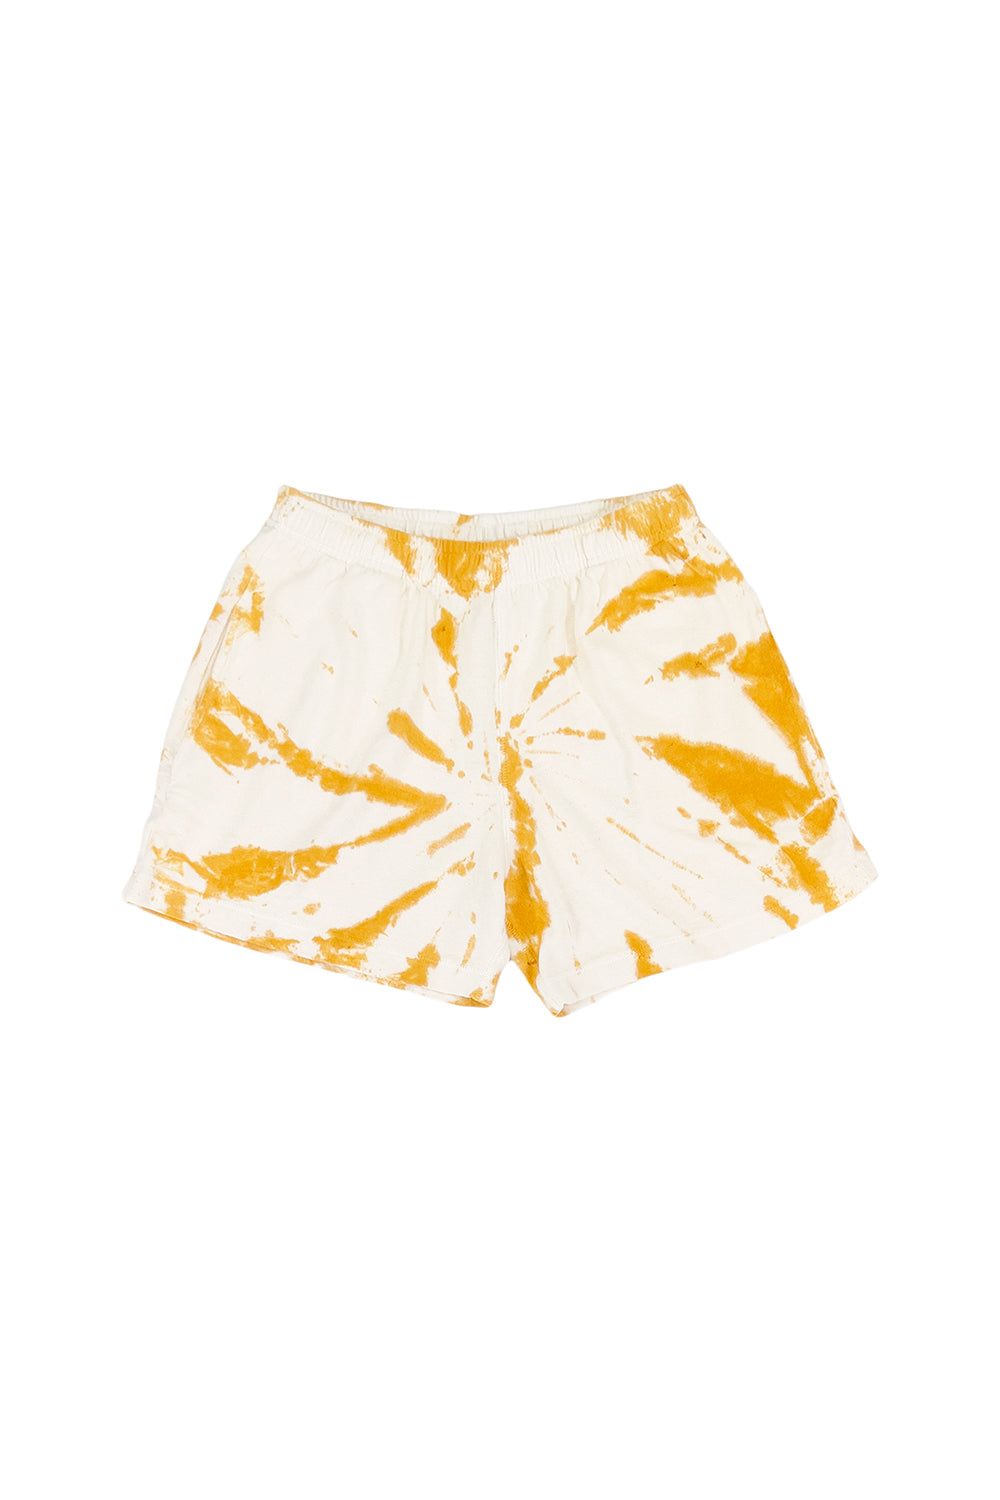 Swirl Sun Short | Jungmaven Hemp Clothing & Accessories / Color: Mango Mojito